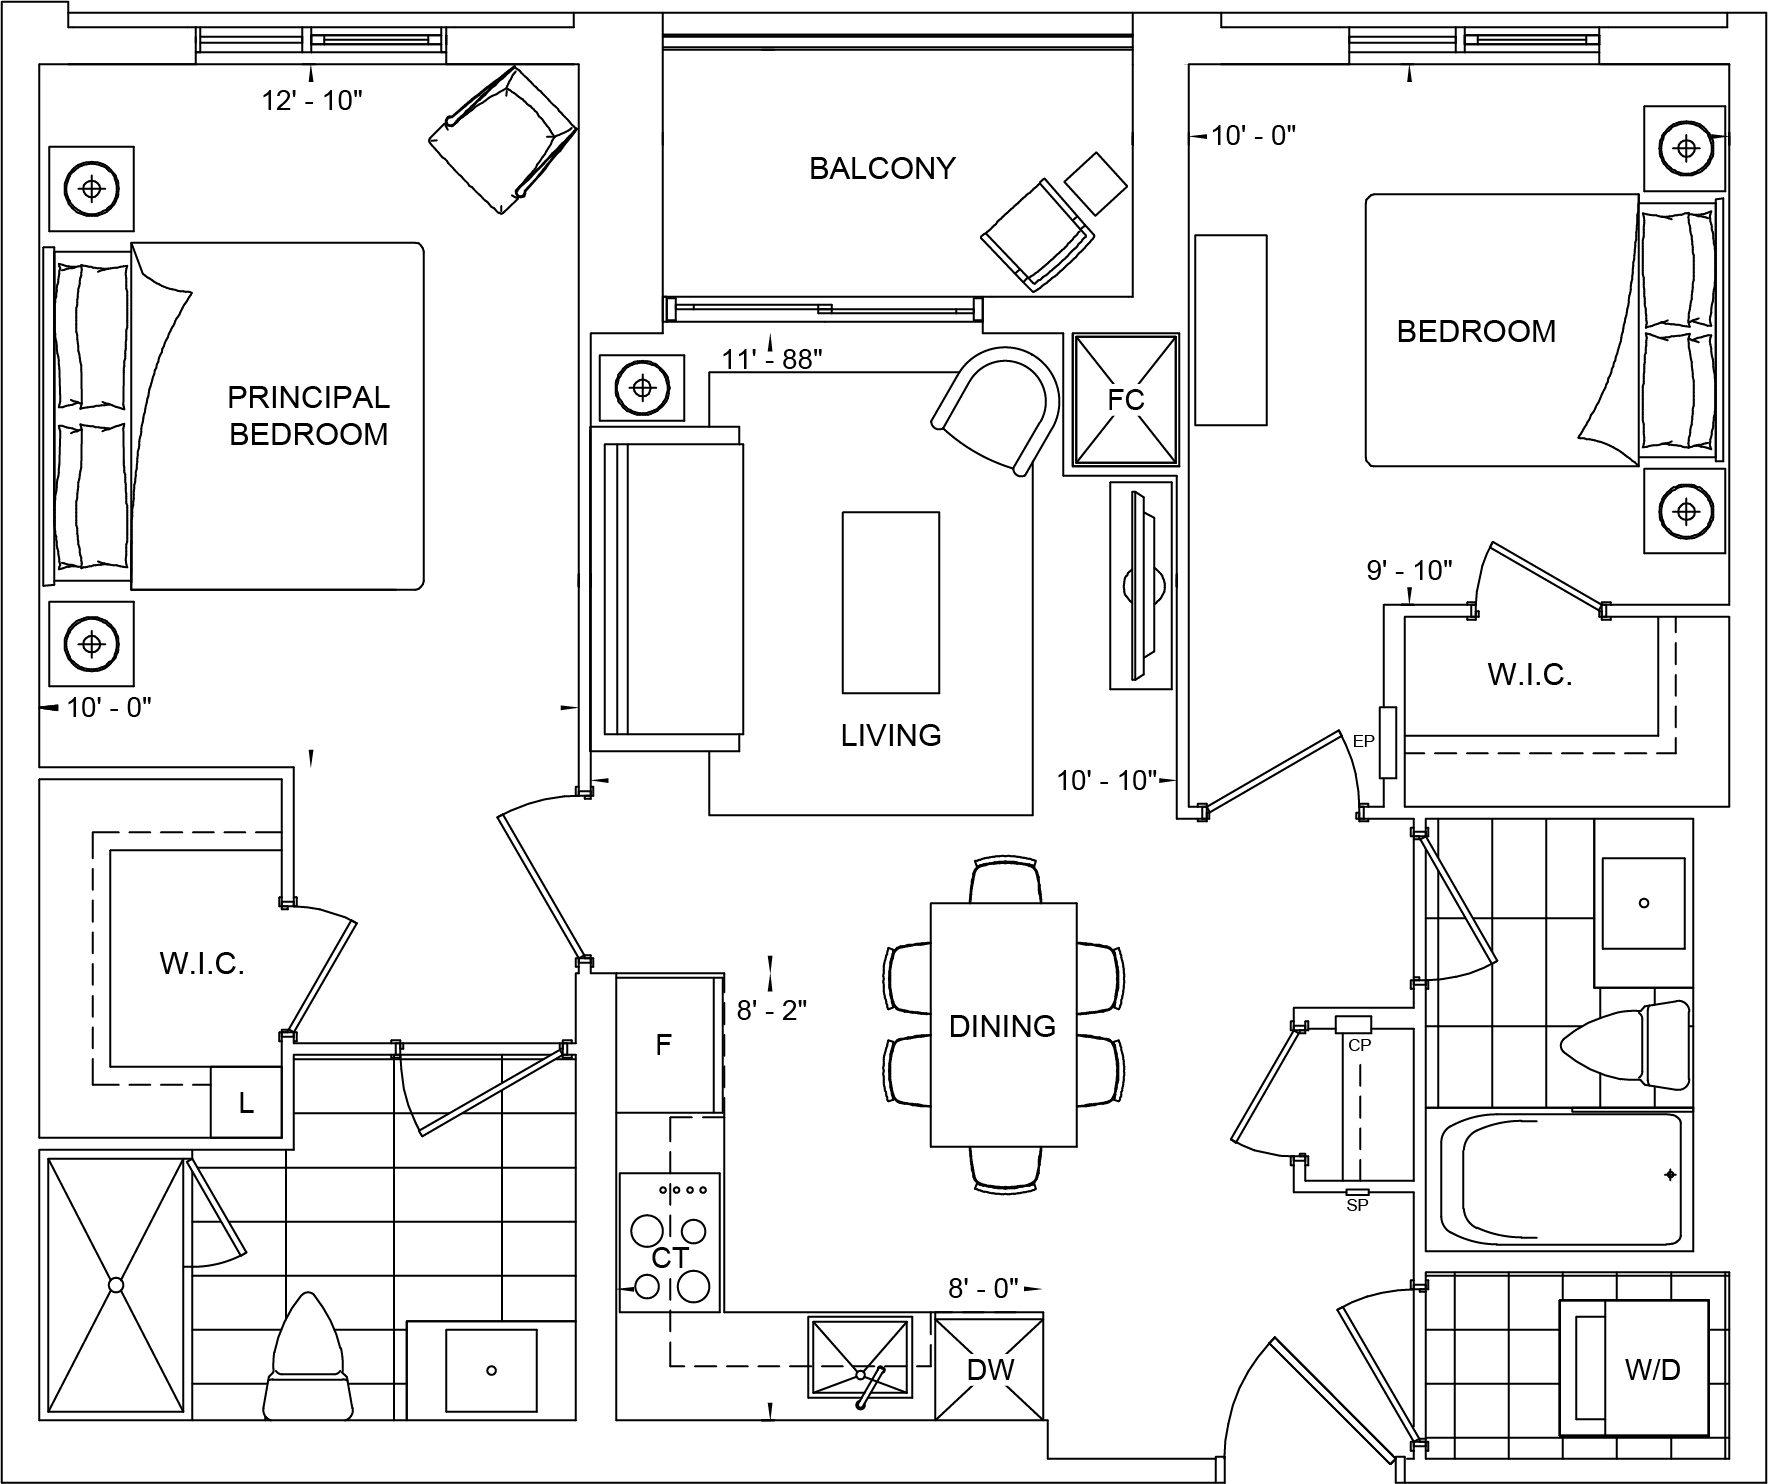 The Dupont Condo Suite 2E Floorplan